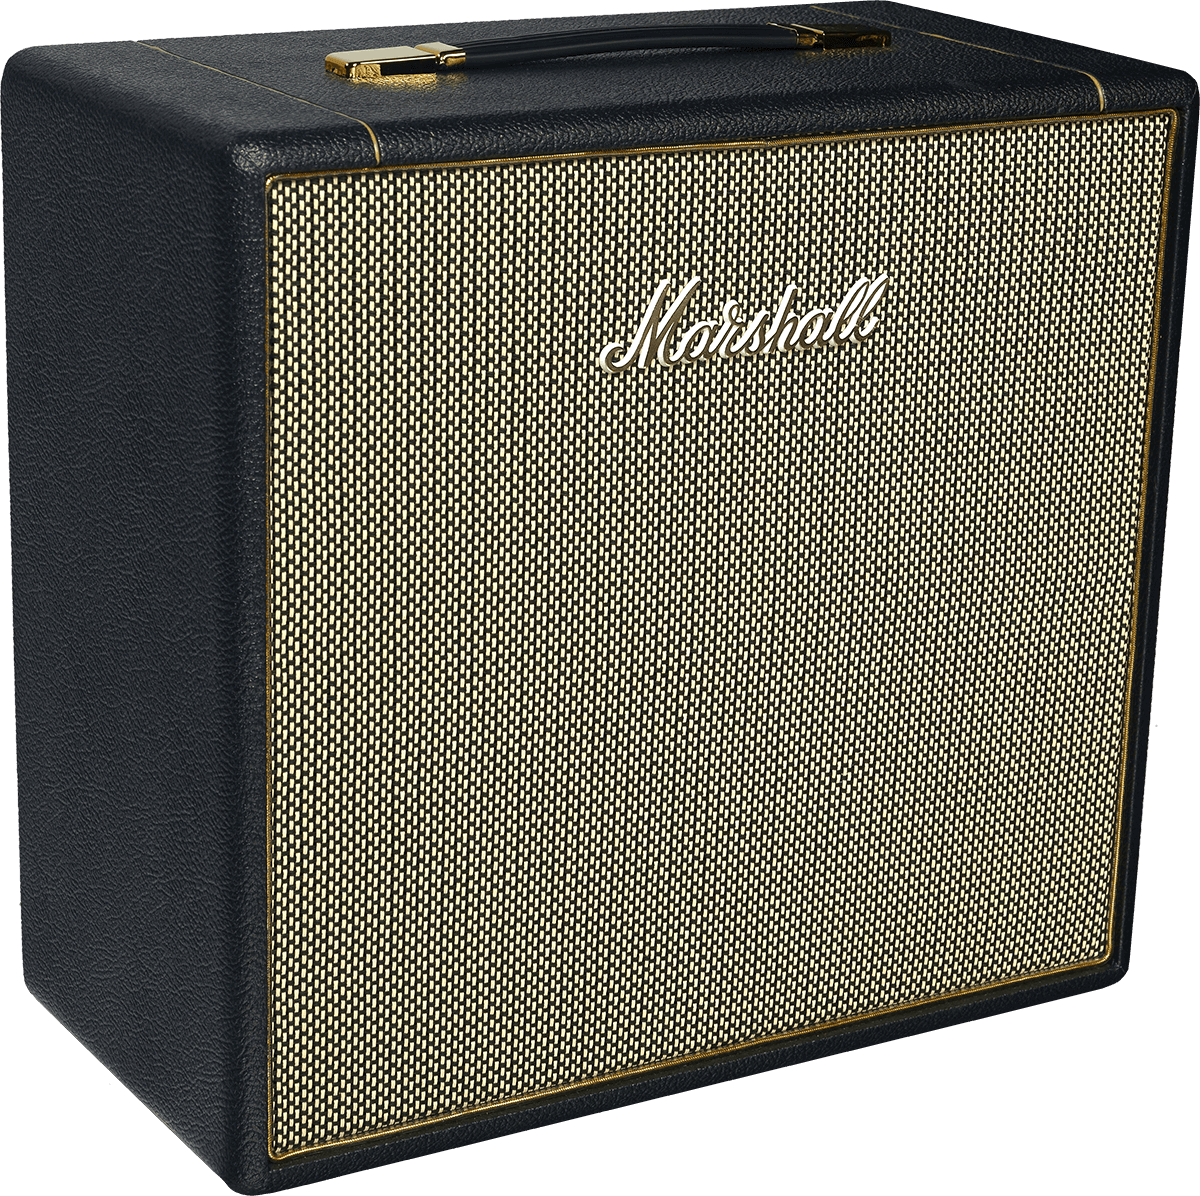 Marshall Studio Vintage 1x12 - Electric guitar amp cabinet - Variation 2